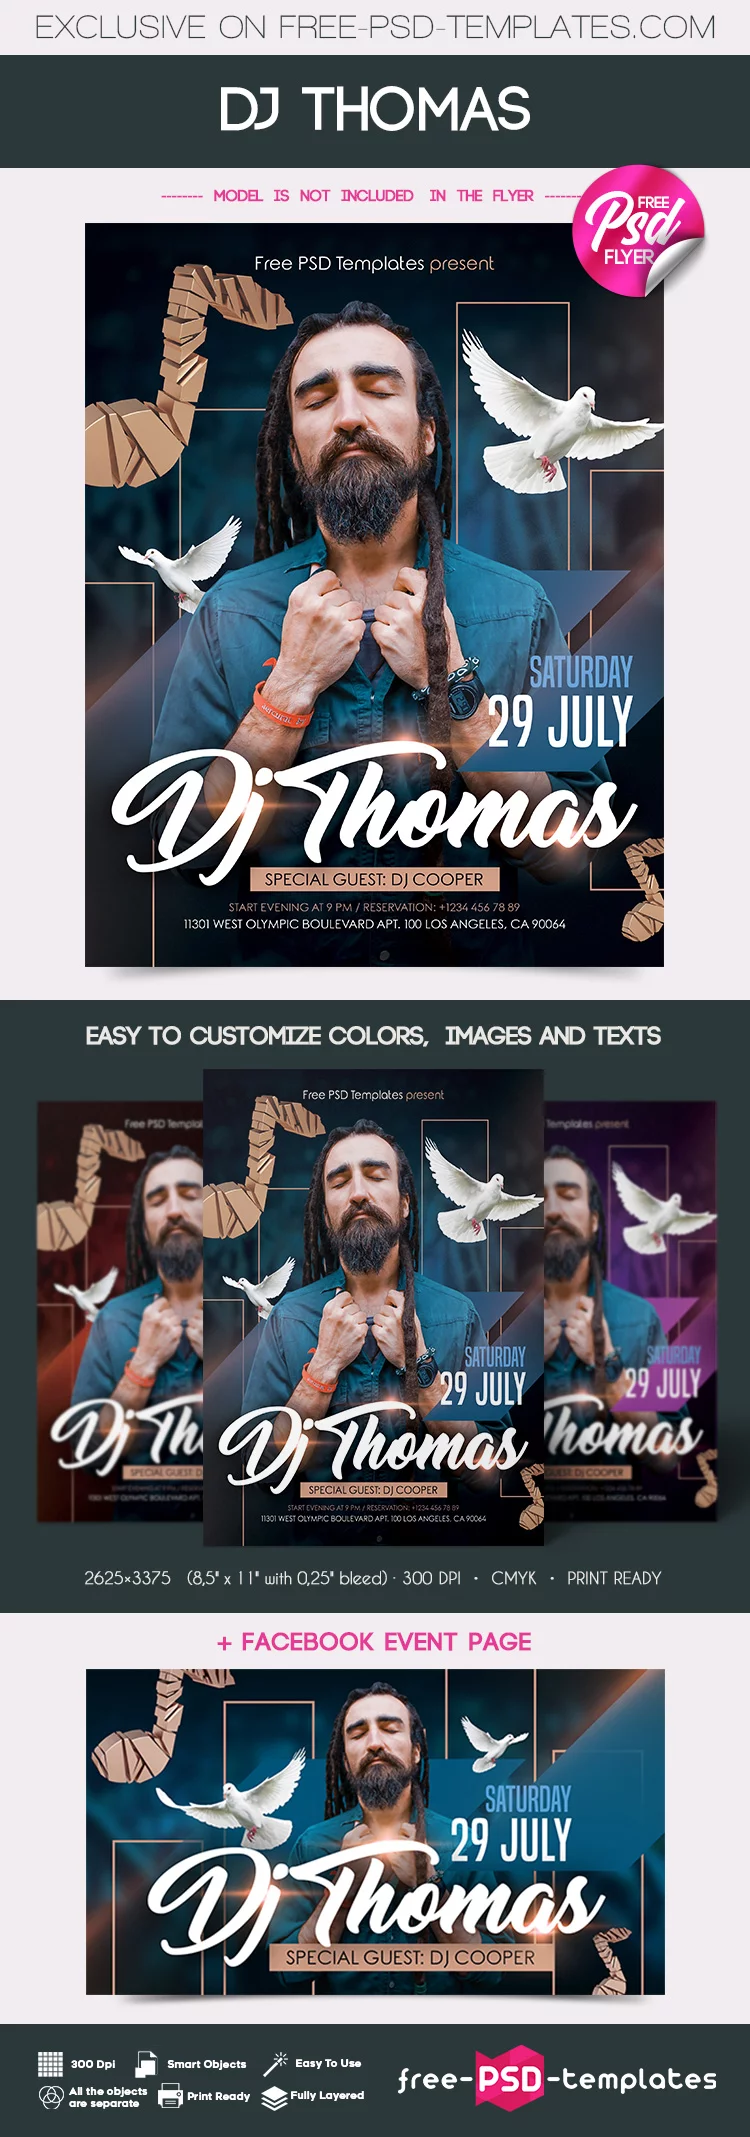 Free DJ Thomas Flyer in PSD